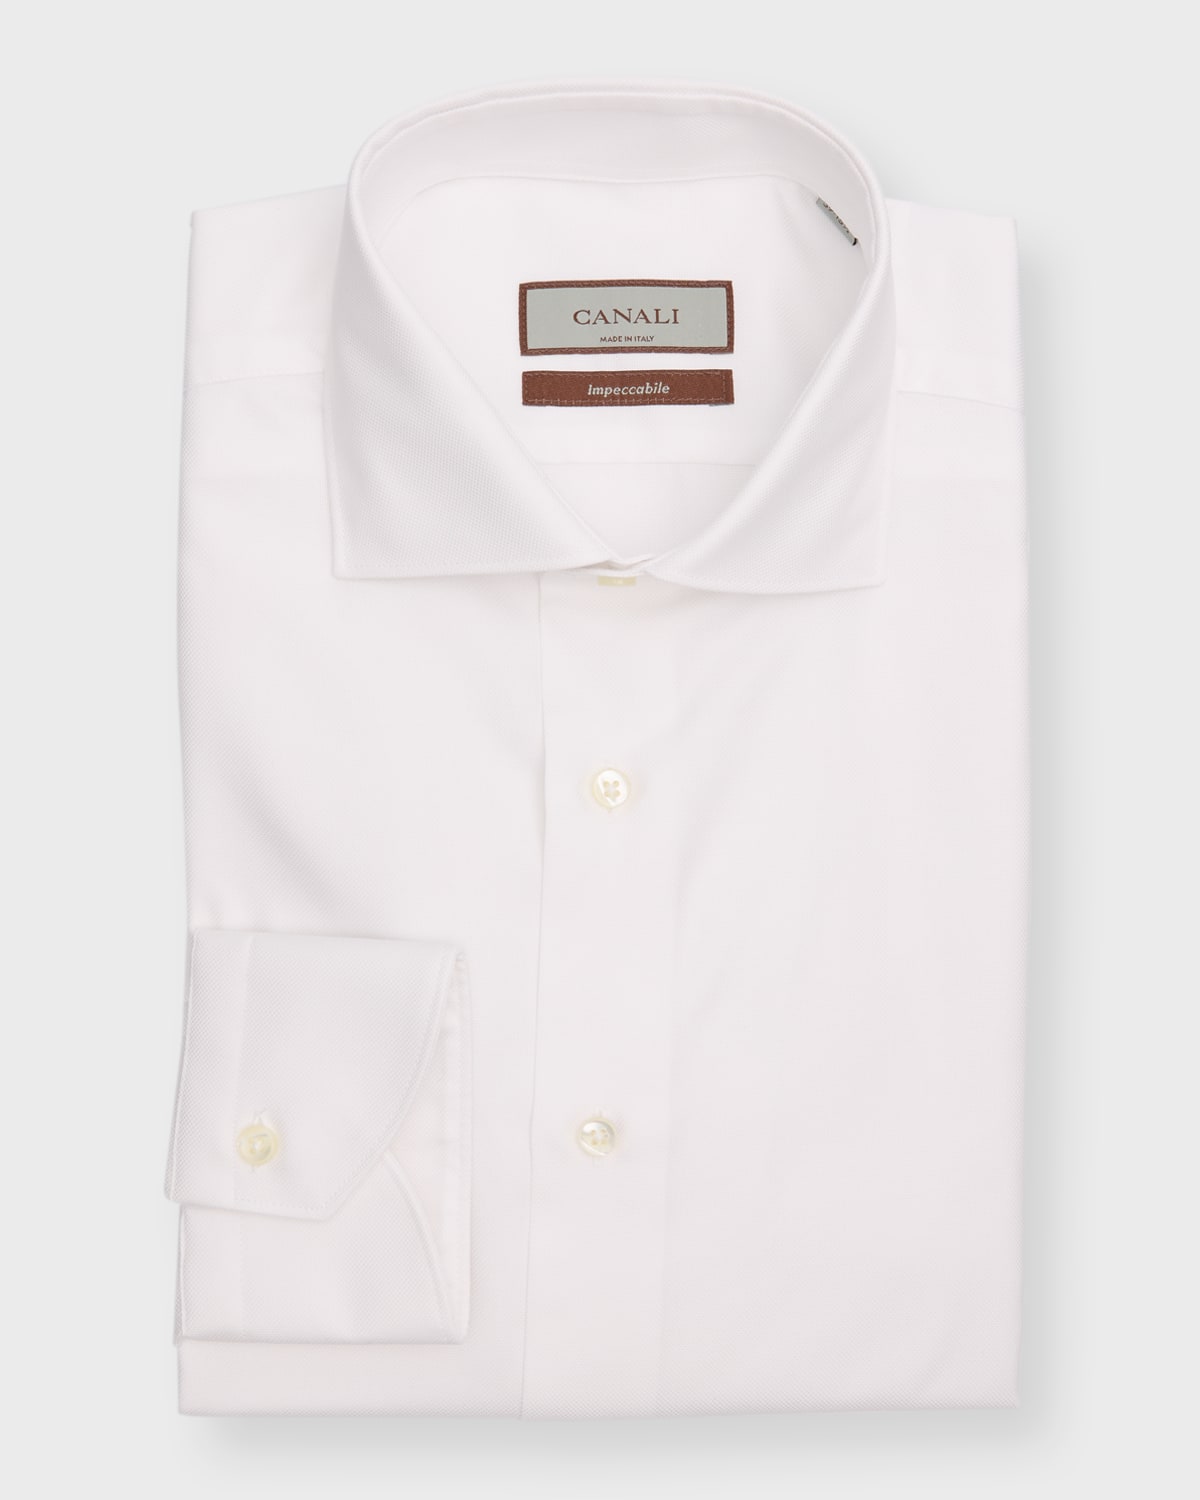 Canali Men's Impeccabile Cotton Pique Dress Shirt In White